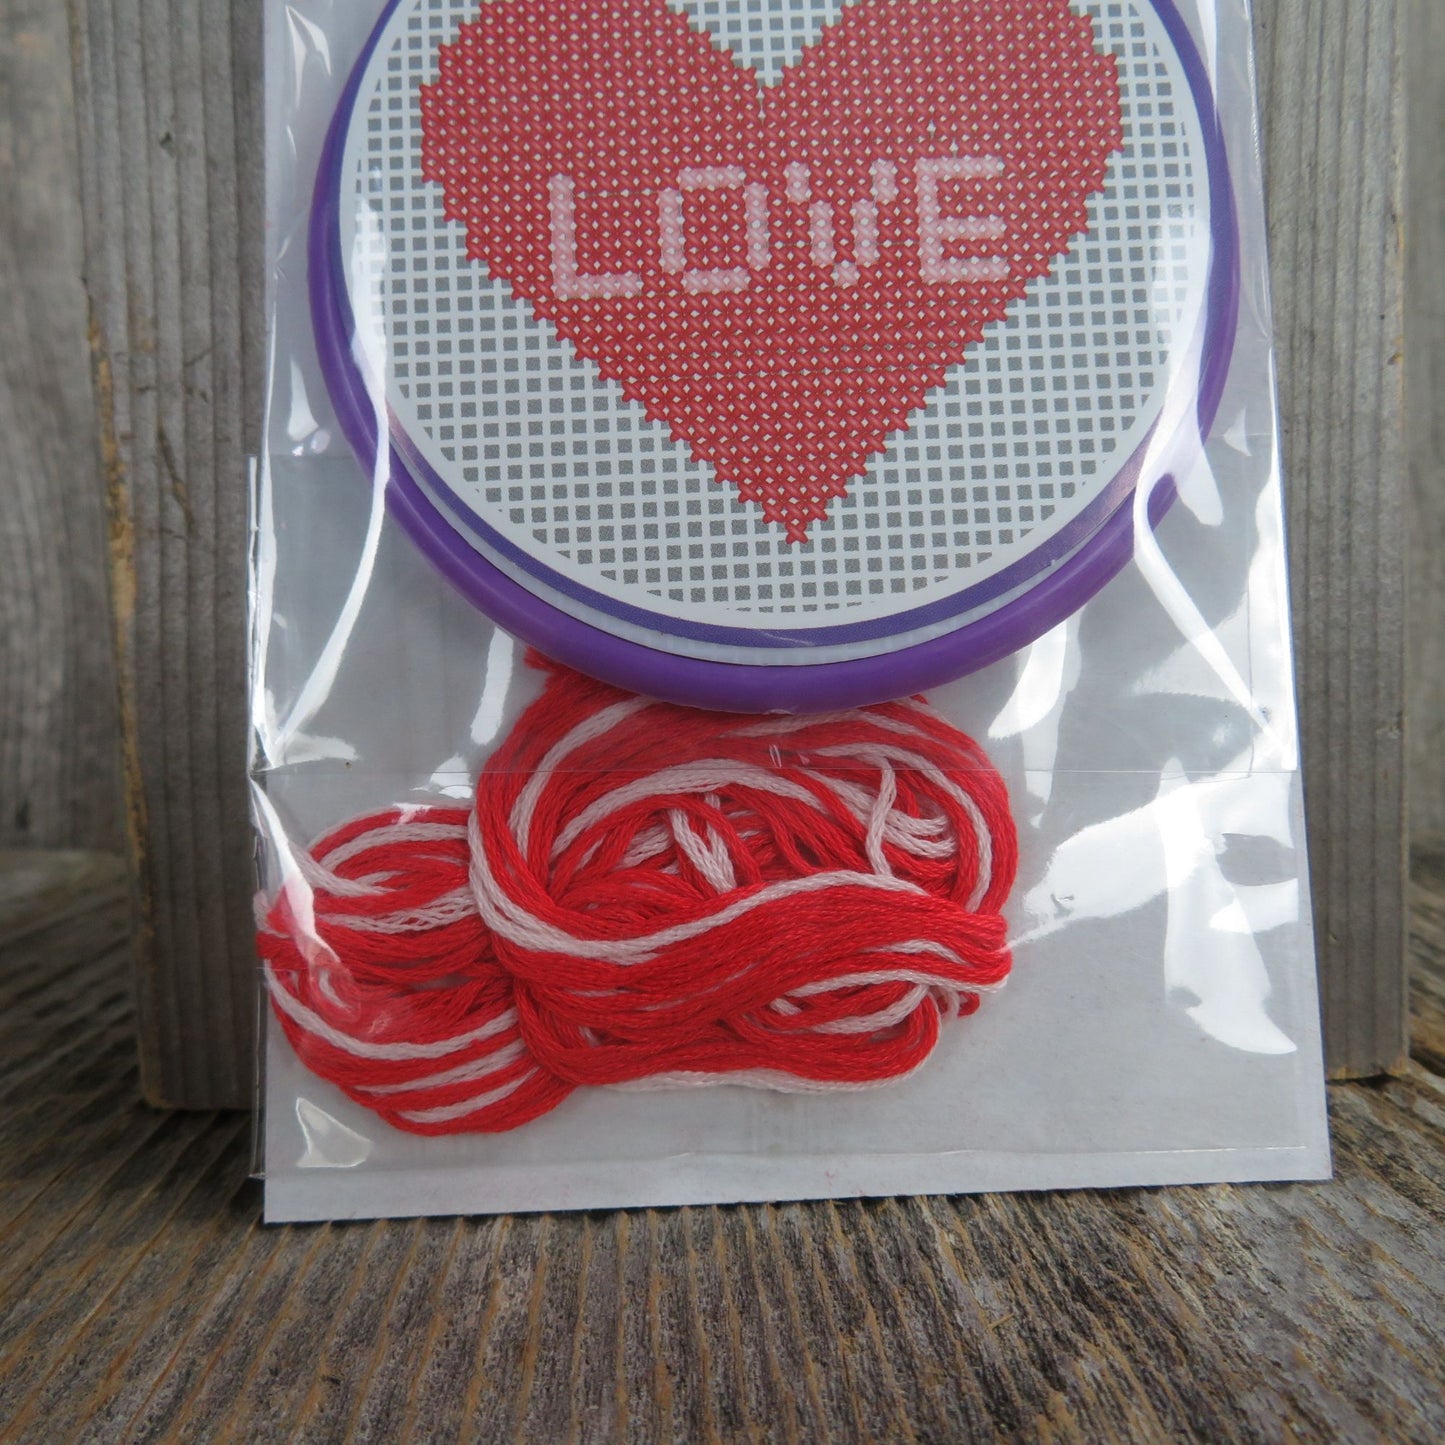 Cross Stitch Love Heart Kit Valentine's Day Kids Craft Plastic Canvas Group Activity